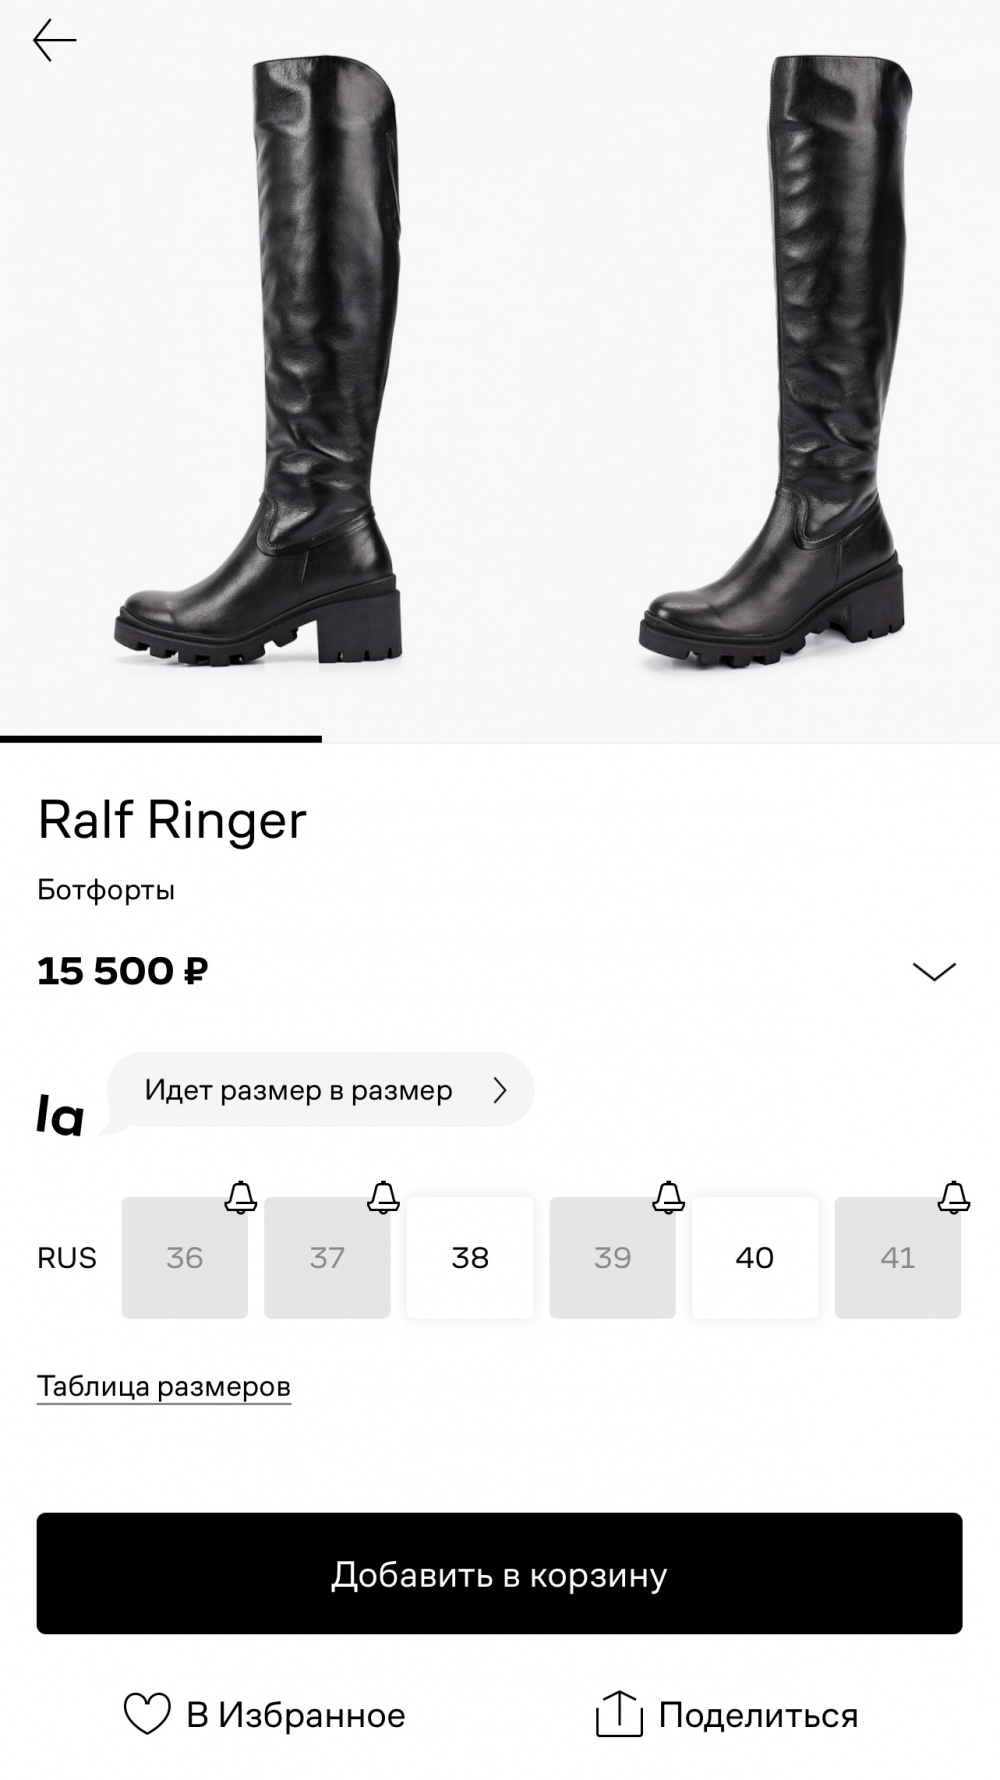 Сапоги Ralf Ringer, 41 размер